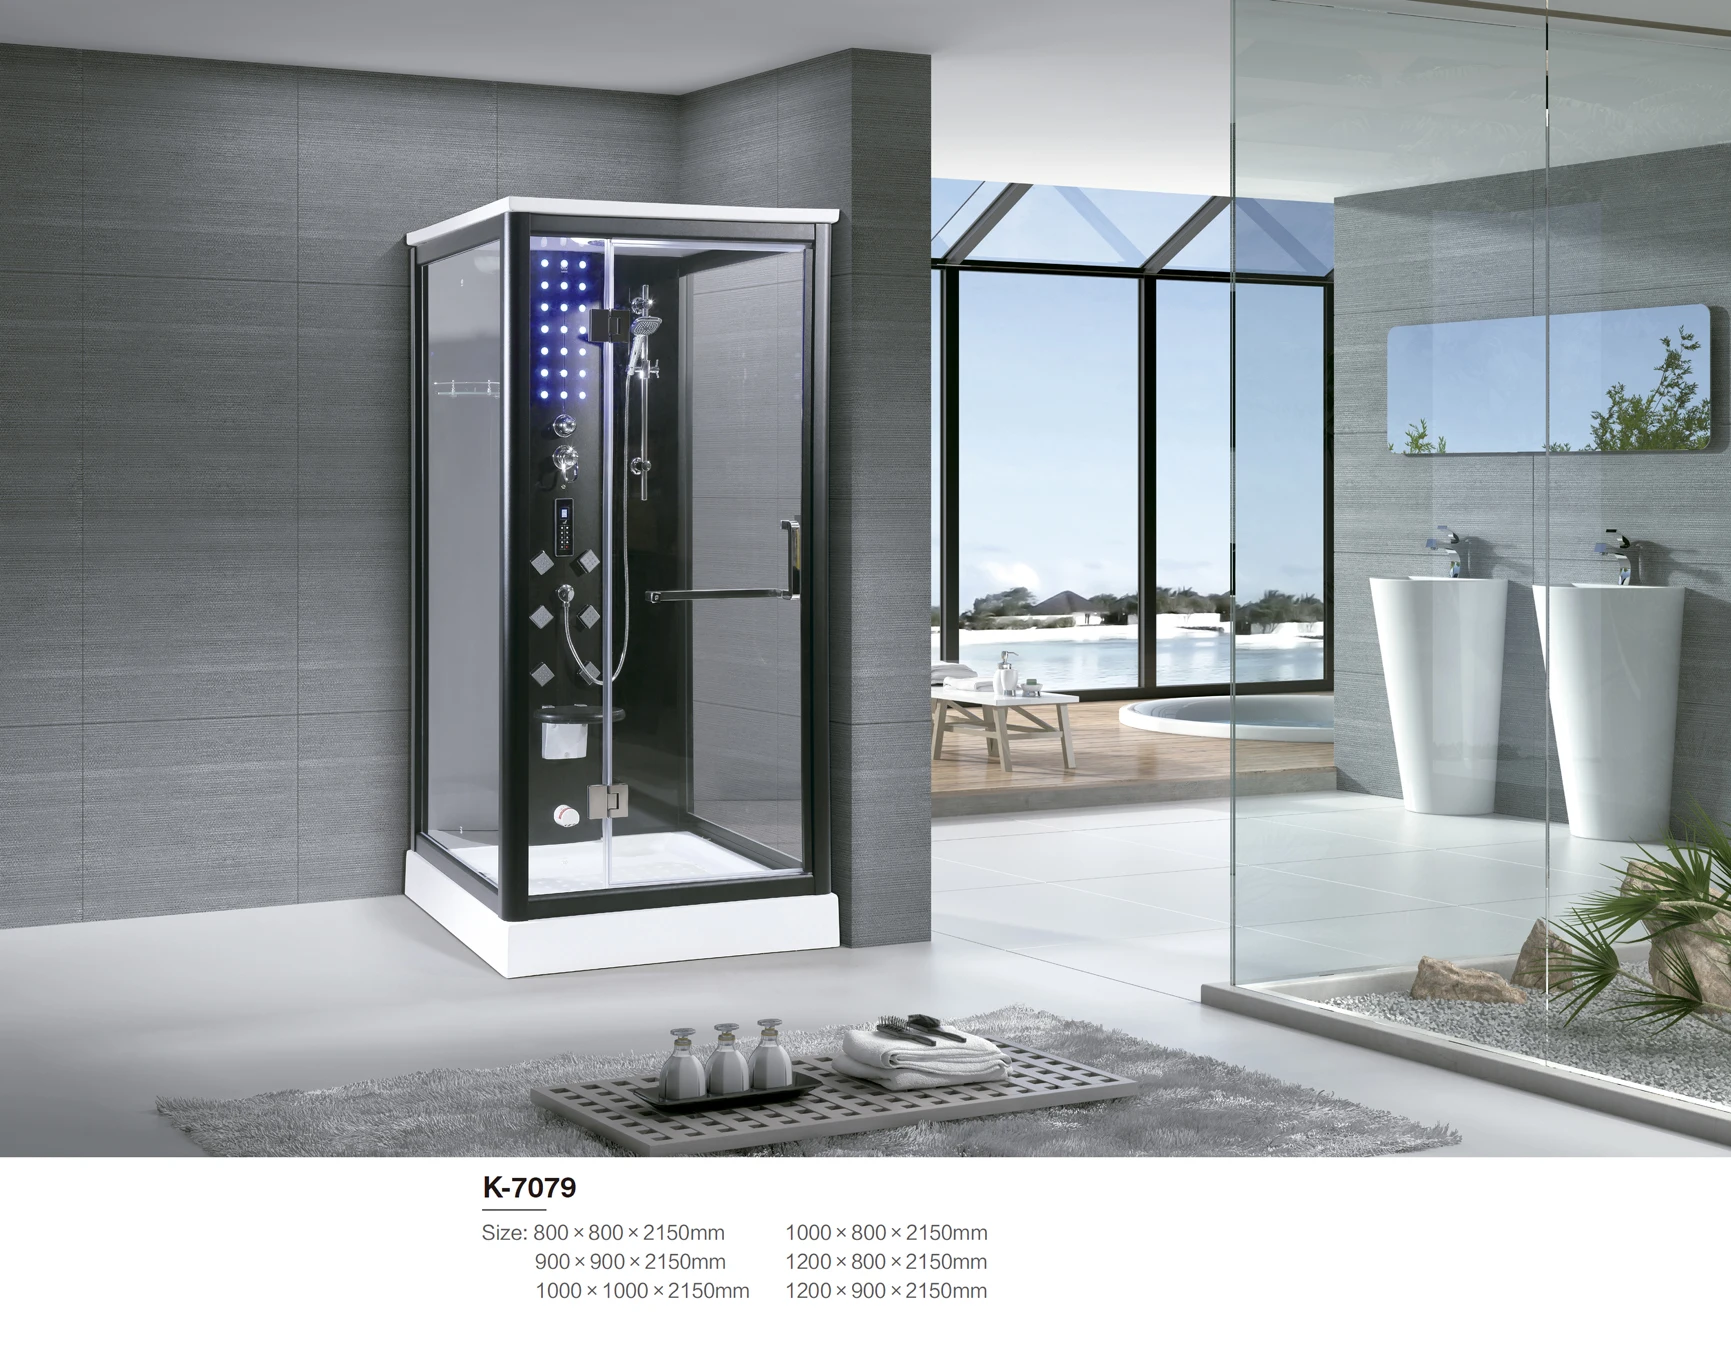 Hotel standard luxury nozzle bathroom whirlpool massage acrylic bathtub steam shower combo room with tub K7079